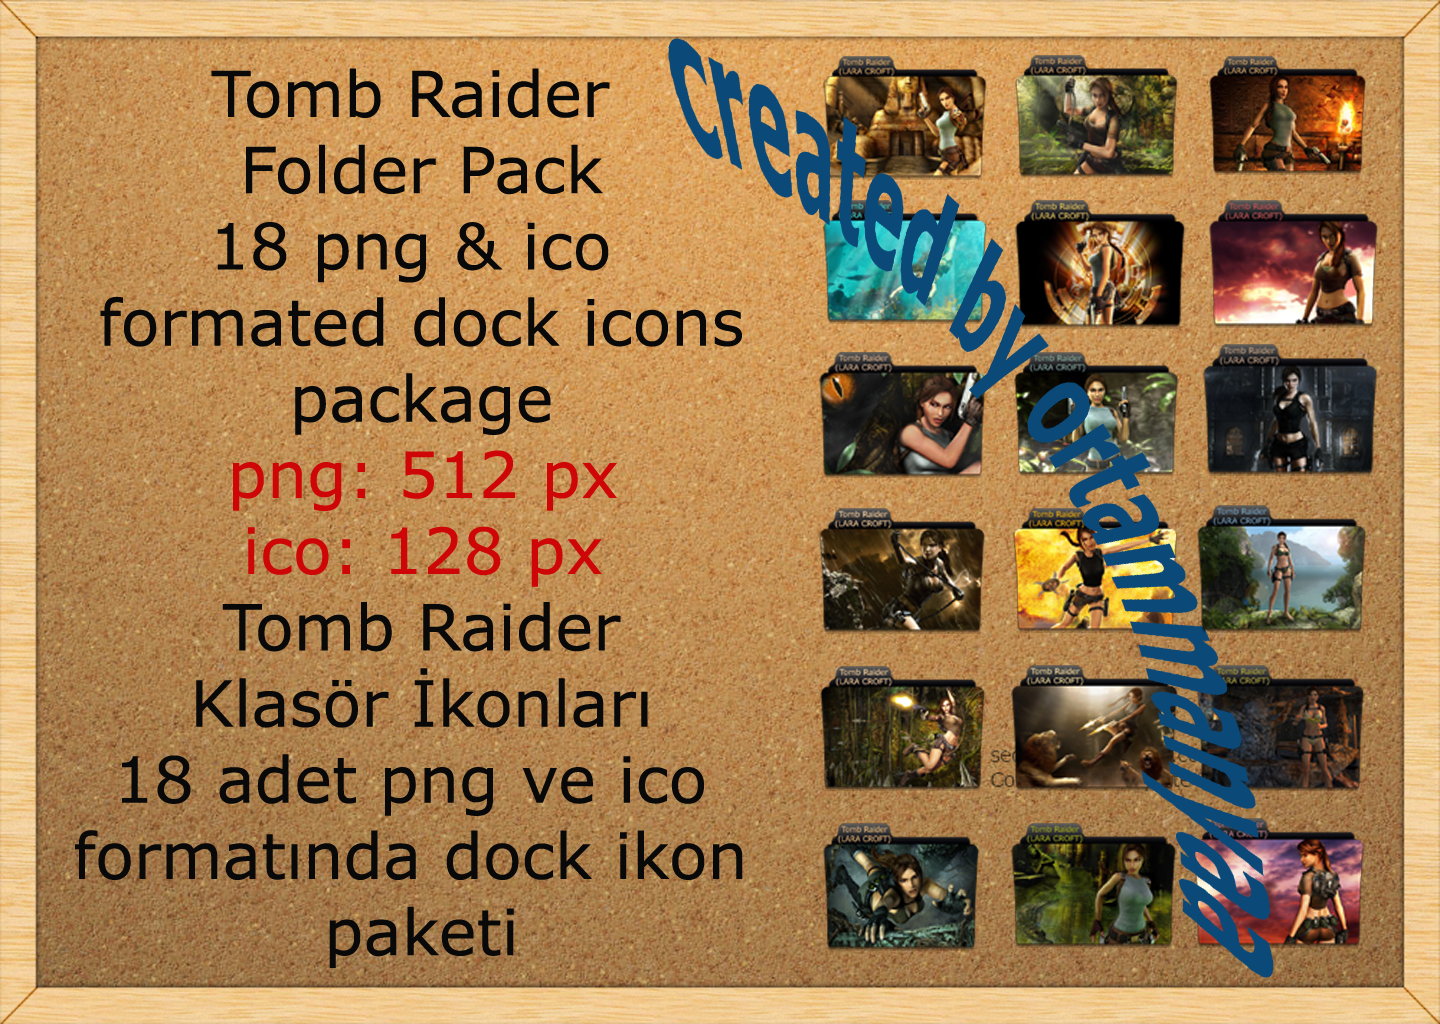 Tomb Raider Folder Pack